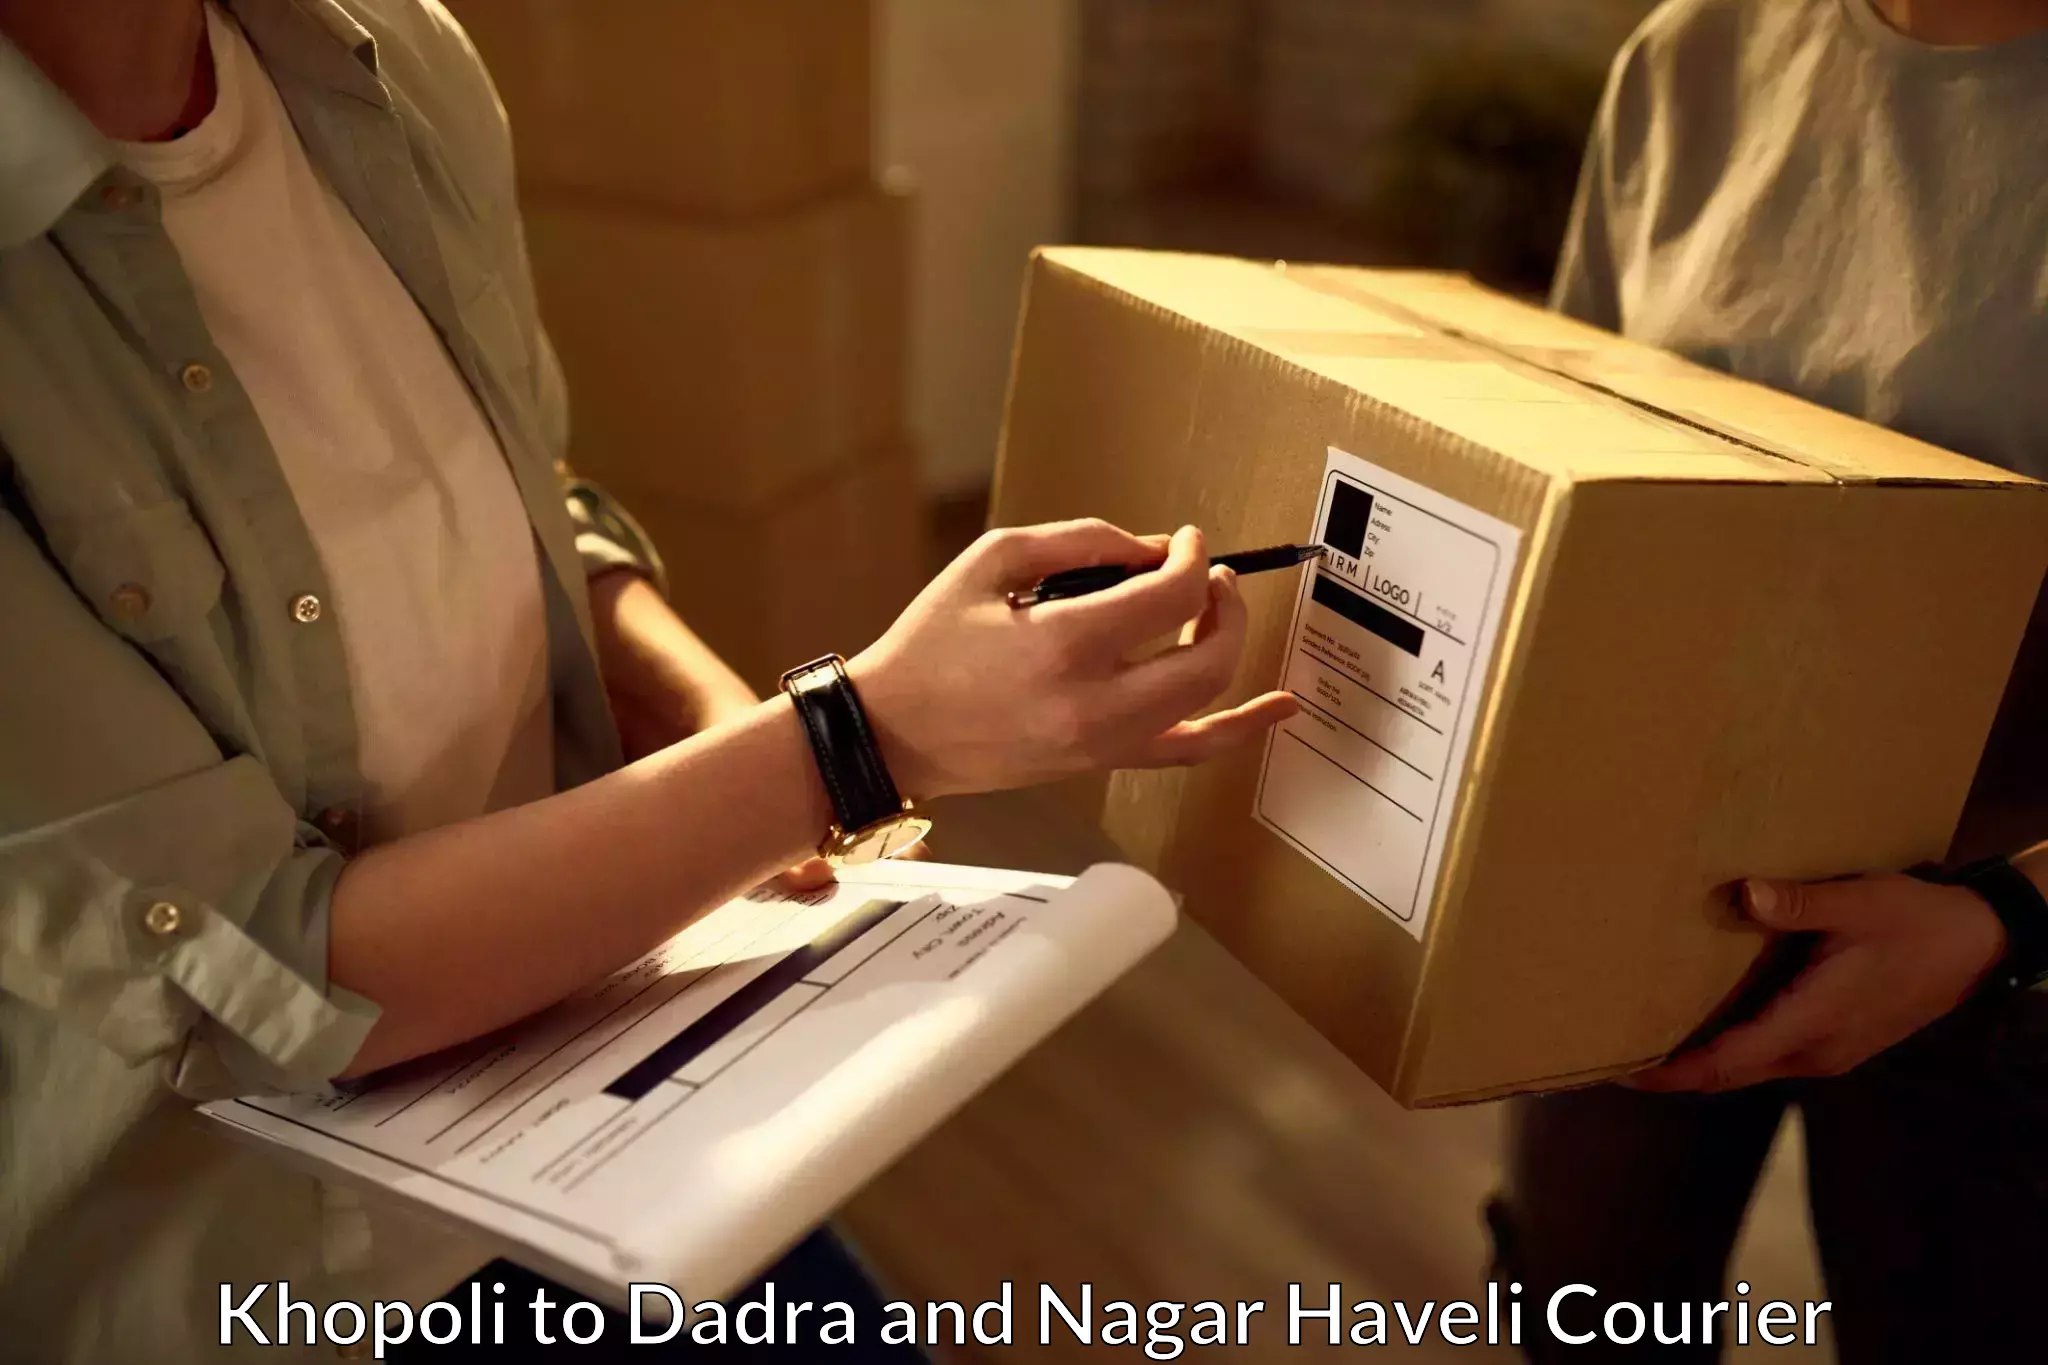 Courier membership Khopoli to Dadra and Nagar Haveli